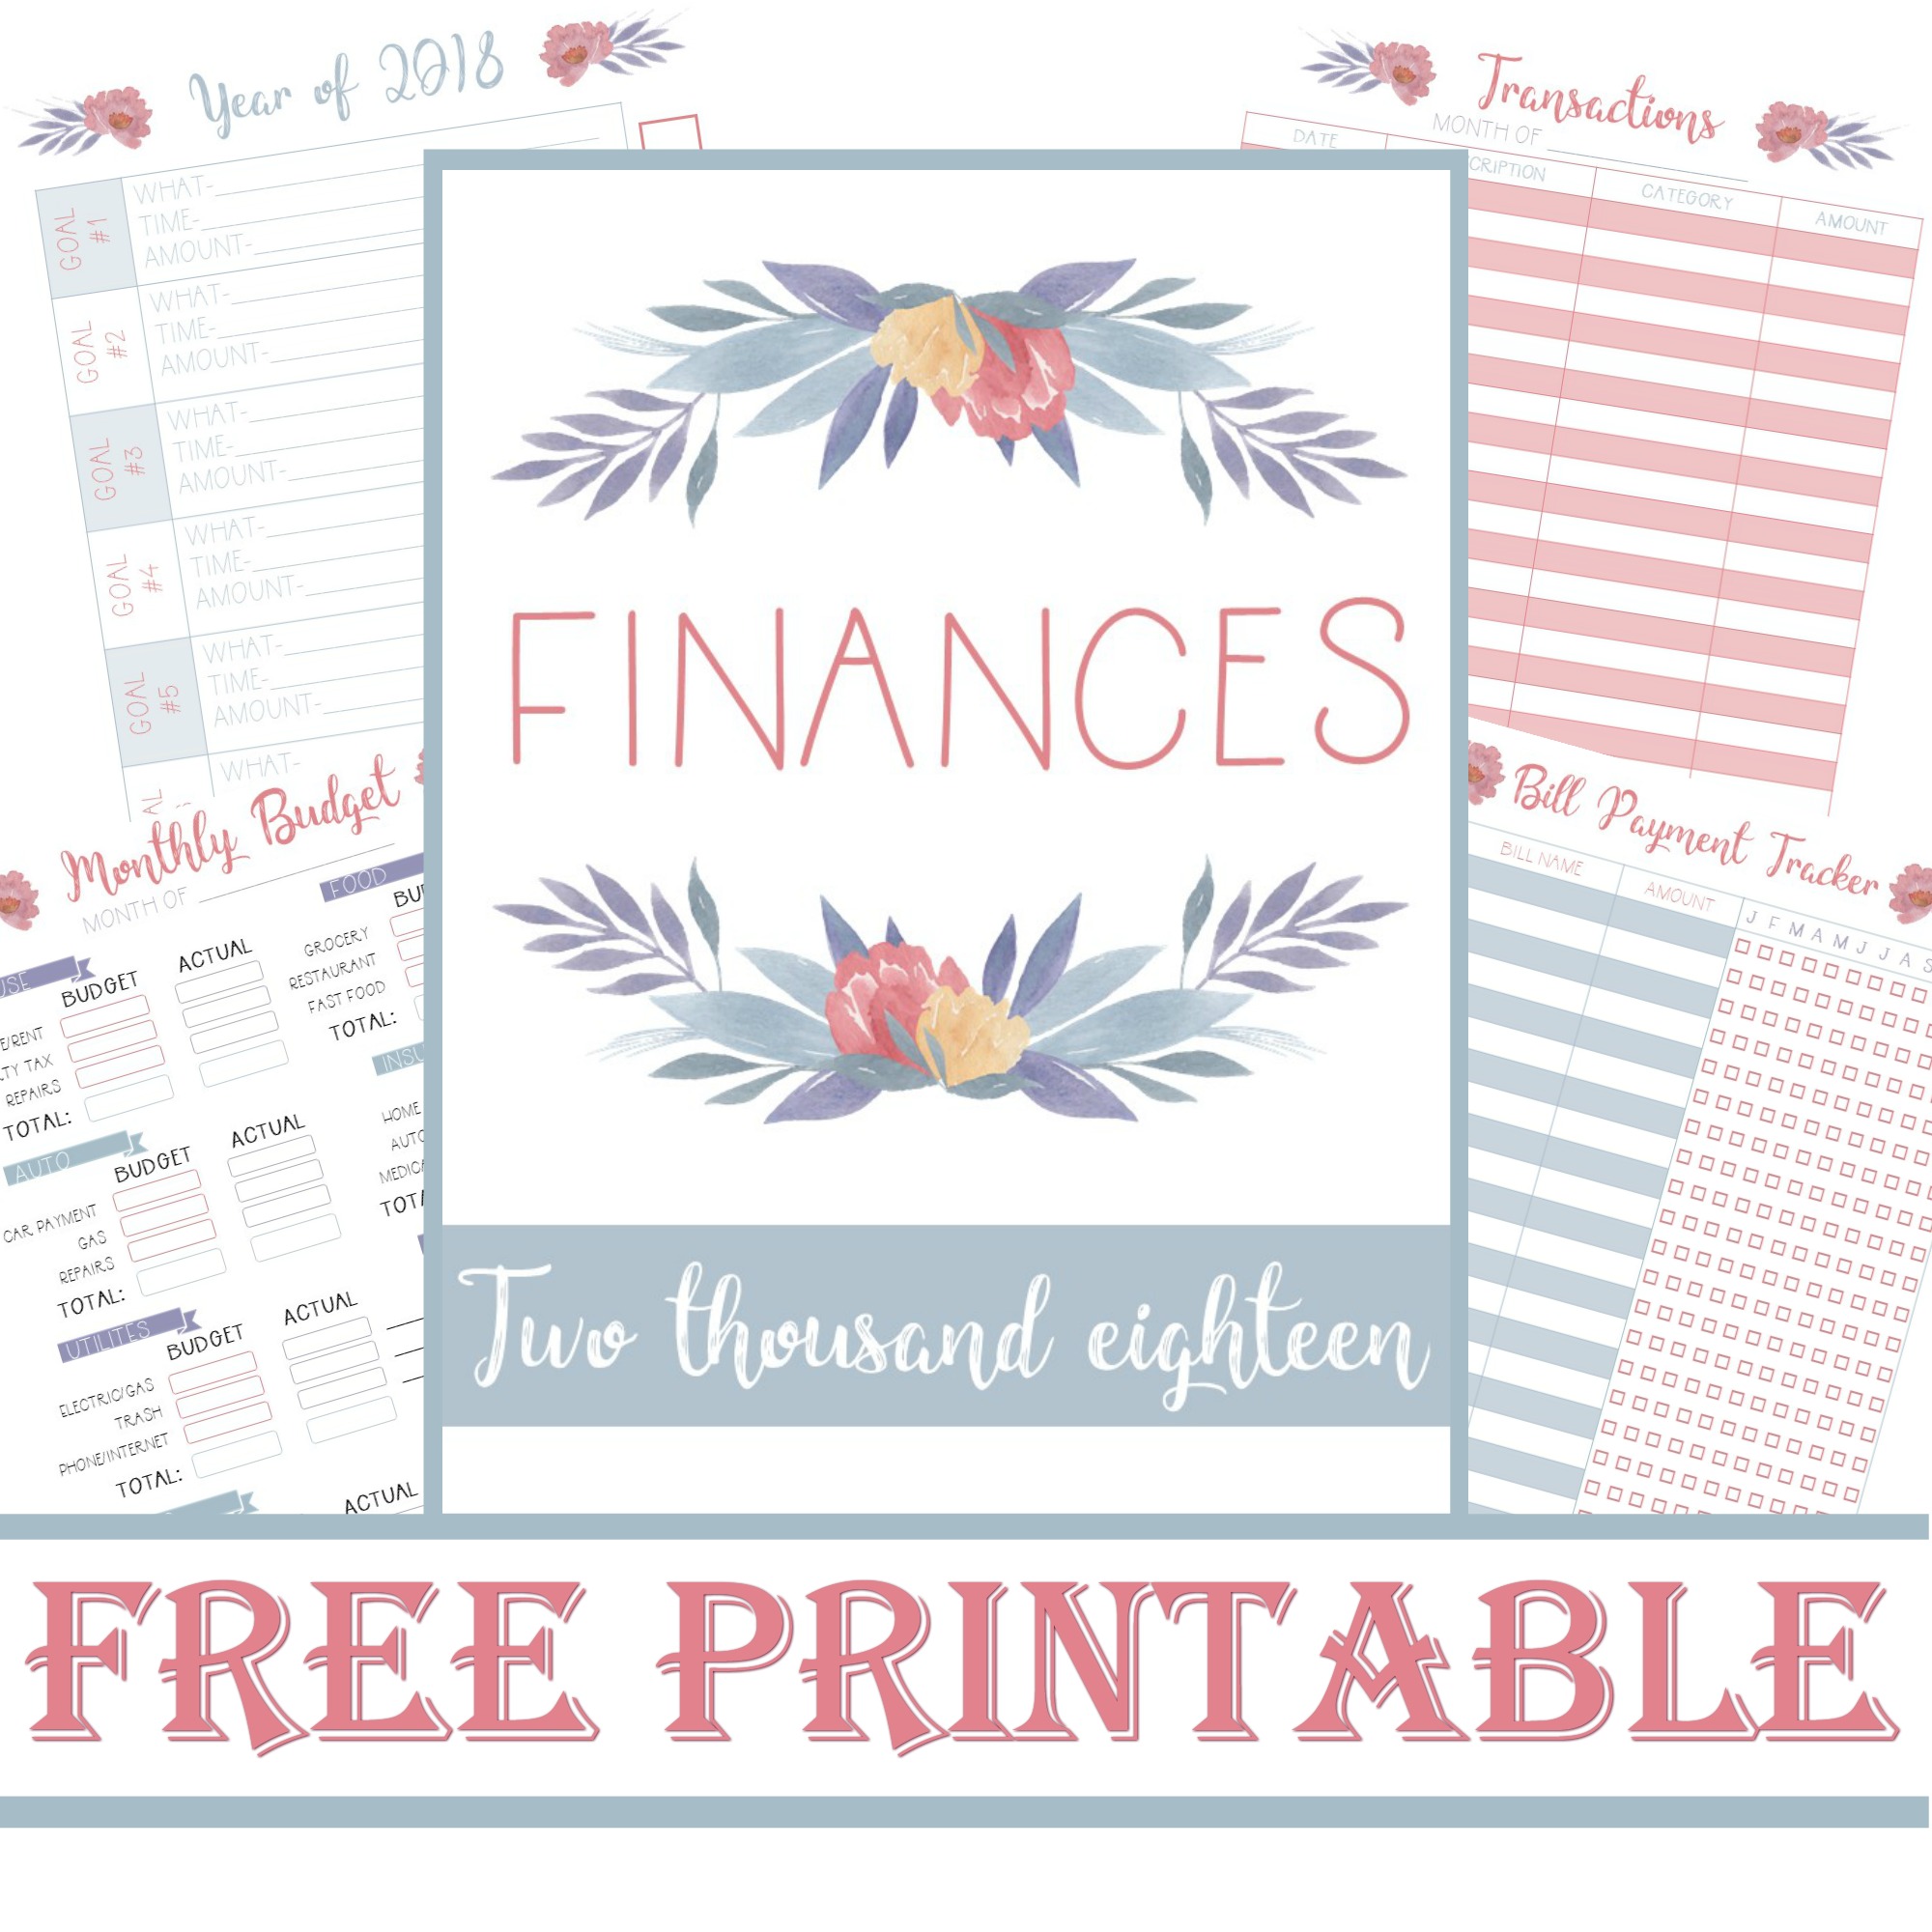 free printable planner finances transactions bill payment monthly budget checklist year goals 2018 layout menu calmandwave main